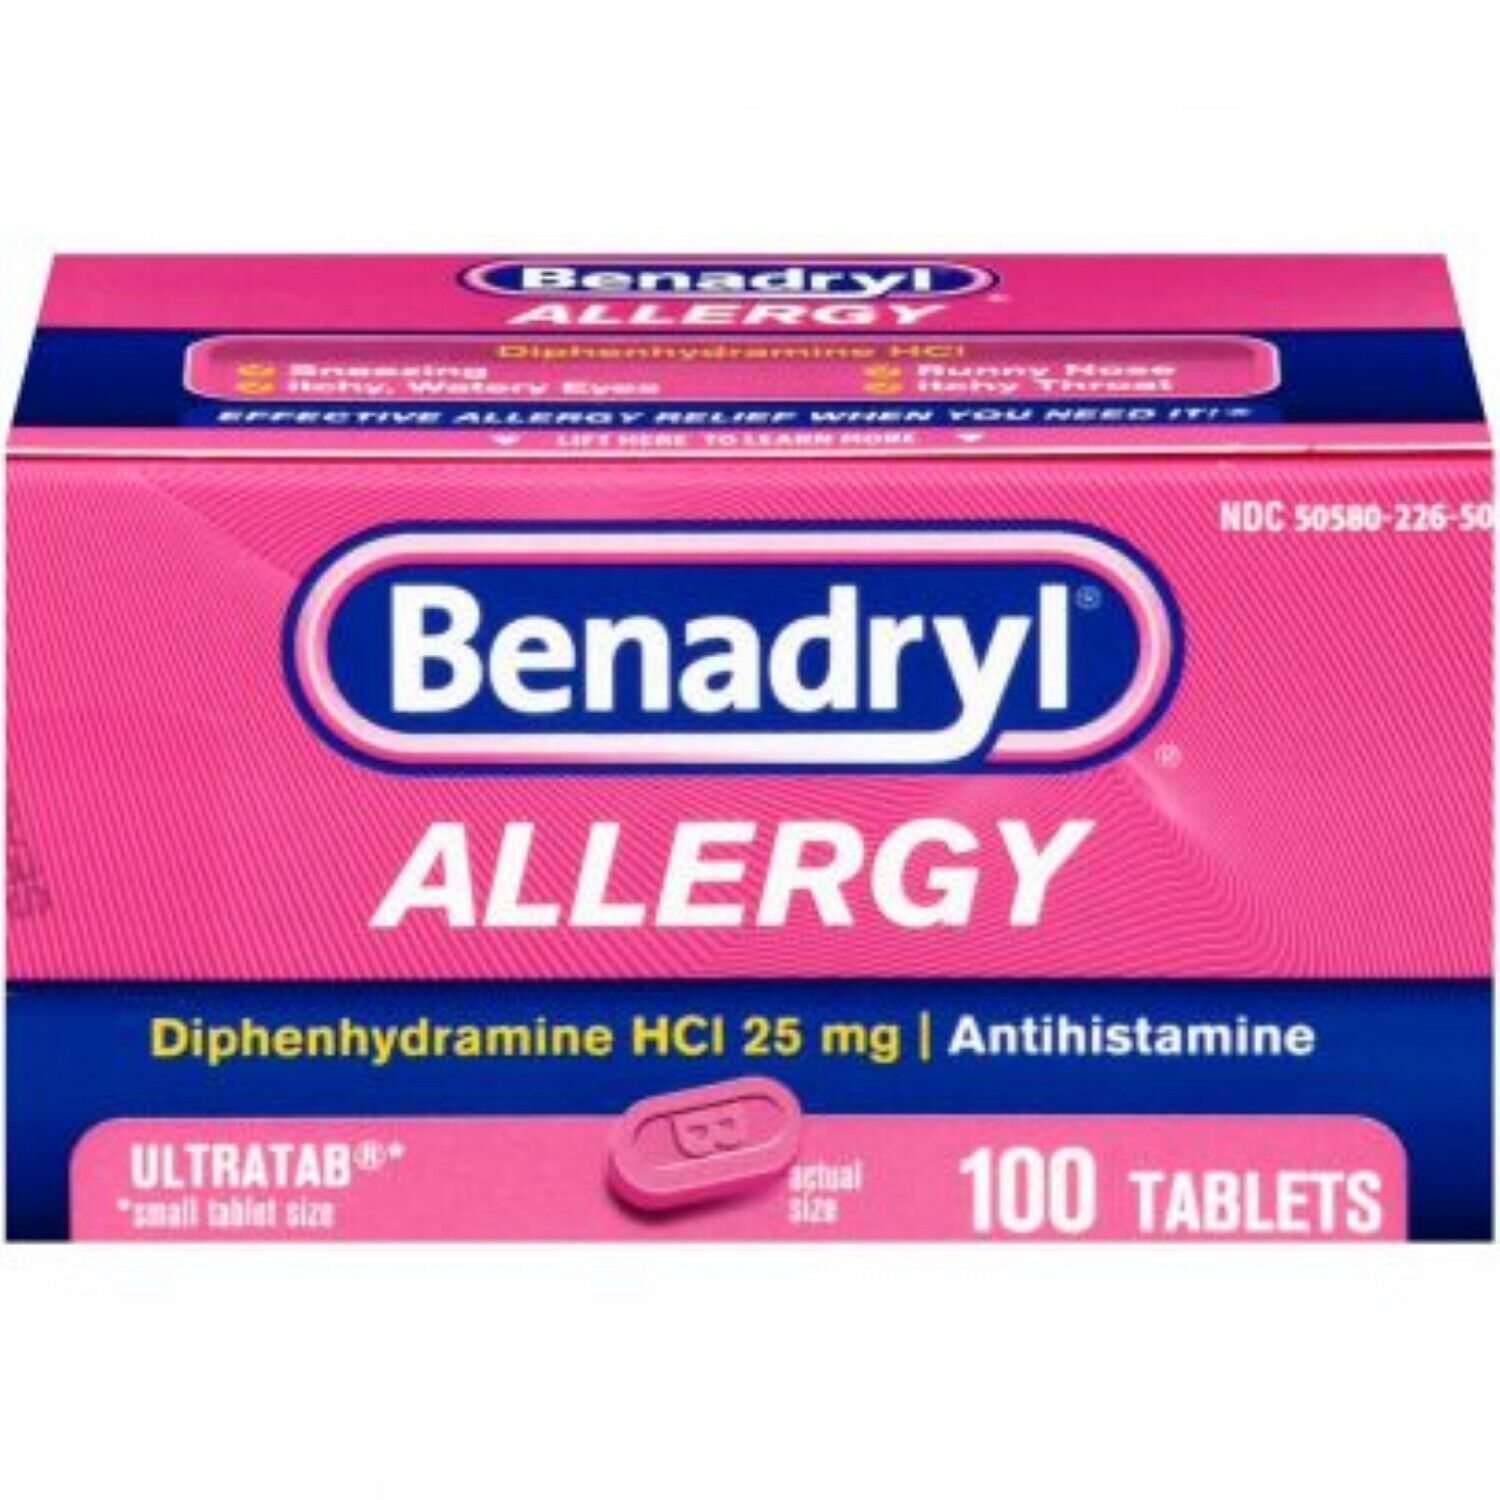 Benadryl Allergy Ultratab Tablets Diphenhydramine Hcl 25 Mg 100 Count Exp:(2022)